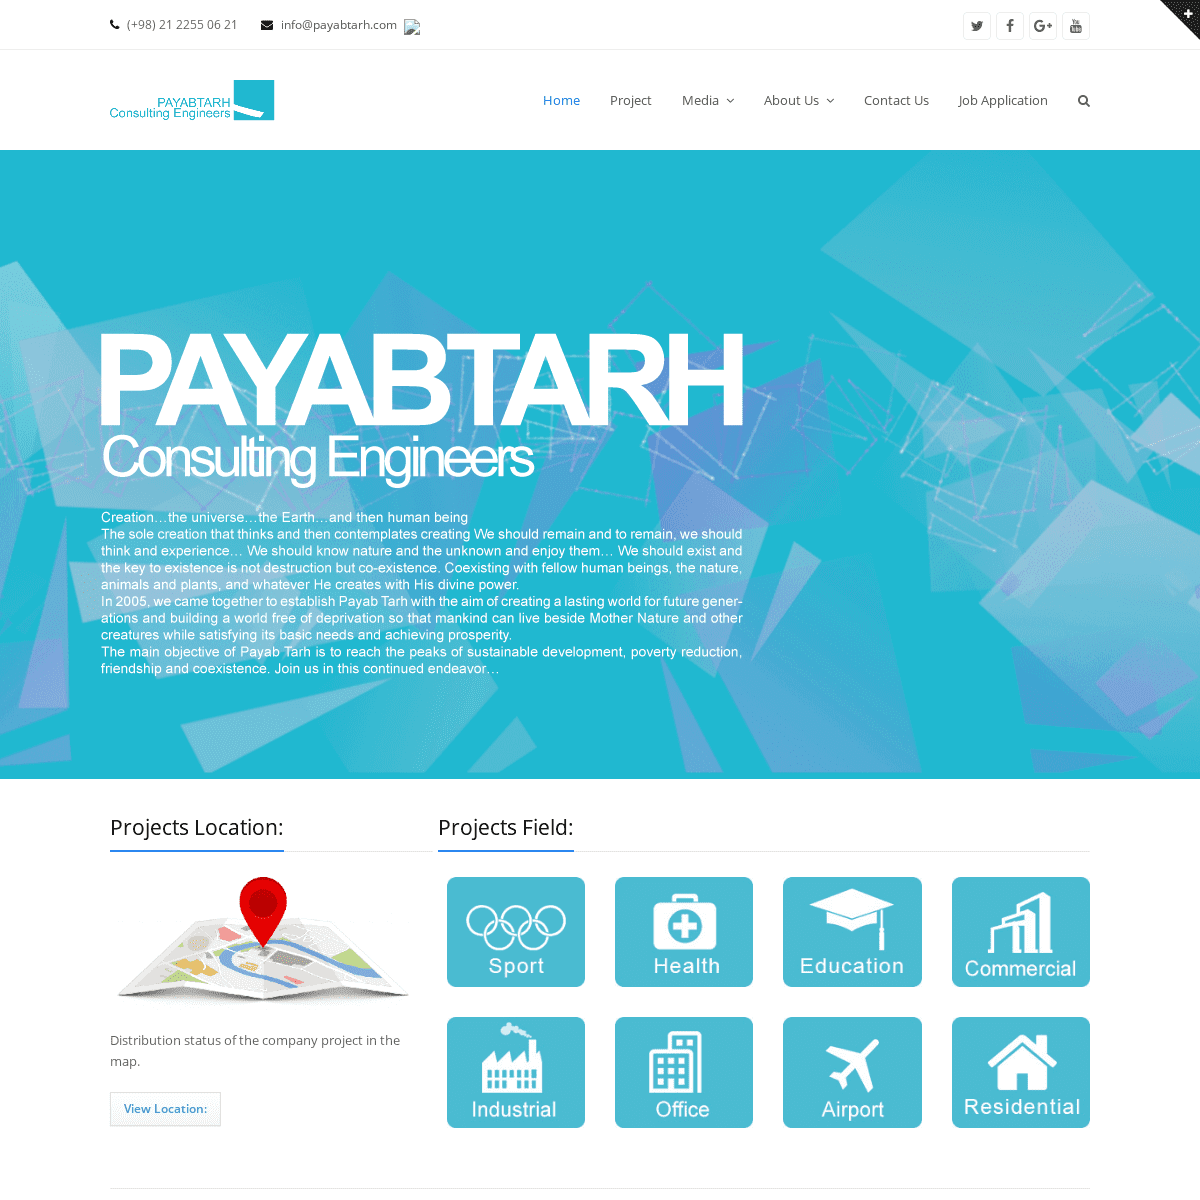 A complete backup of payabtarh.com